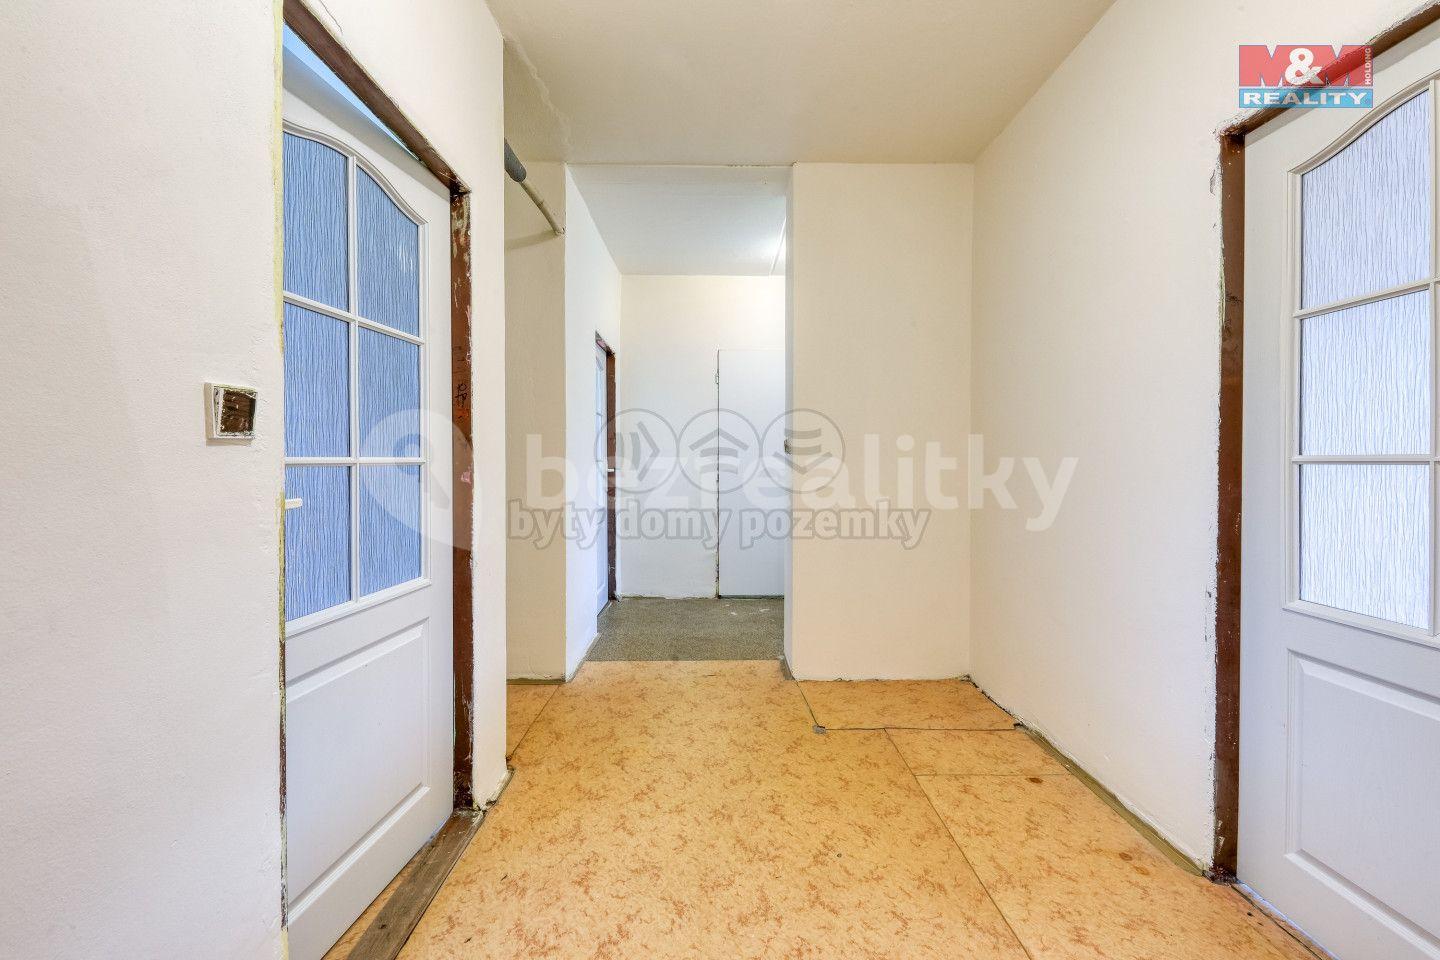 3 bedroom flat for sale, 75 m², Bezvěrov, Plzeňský Region